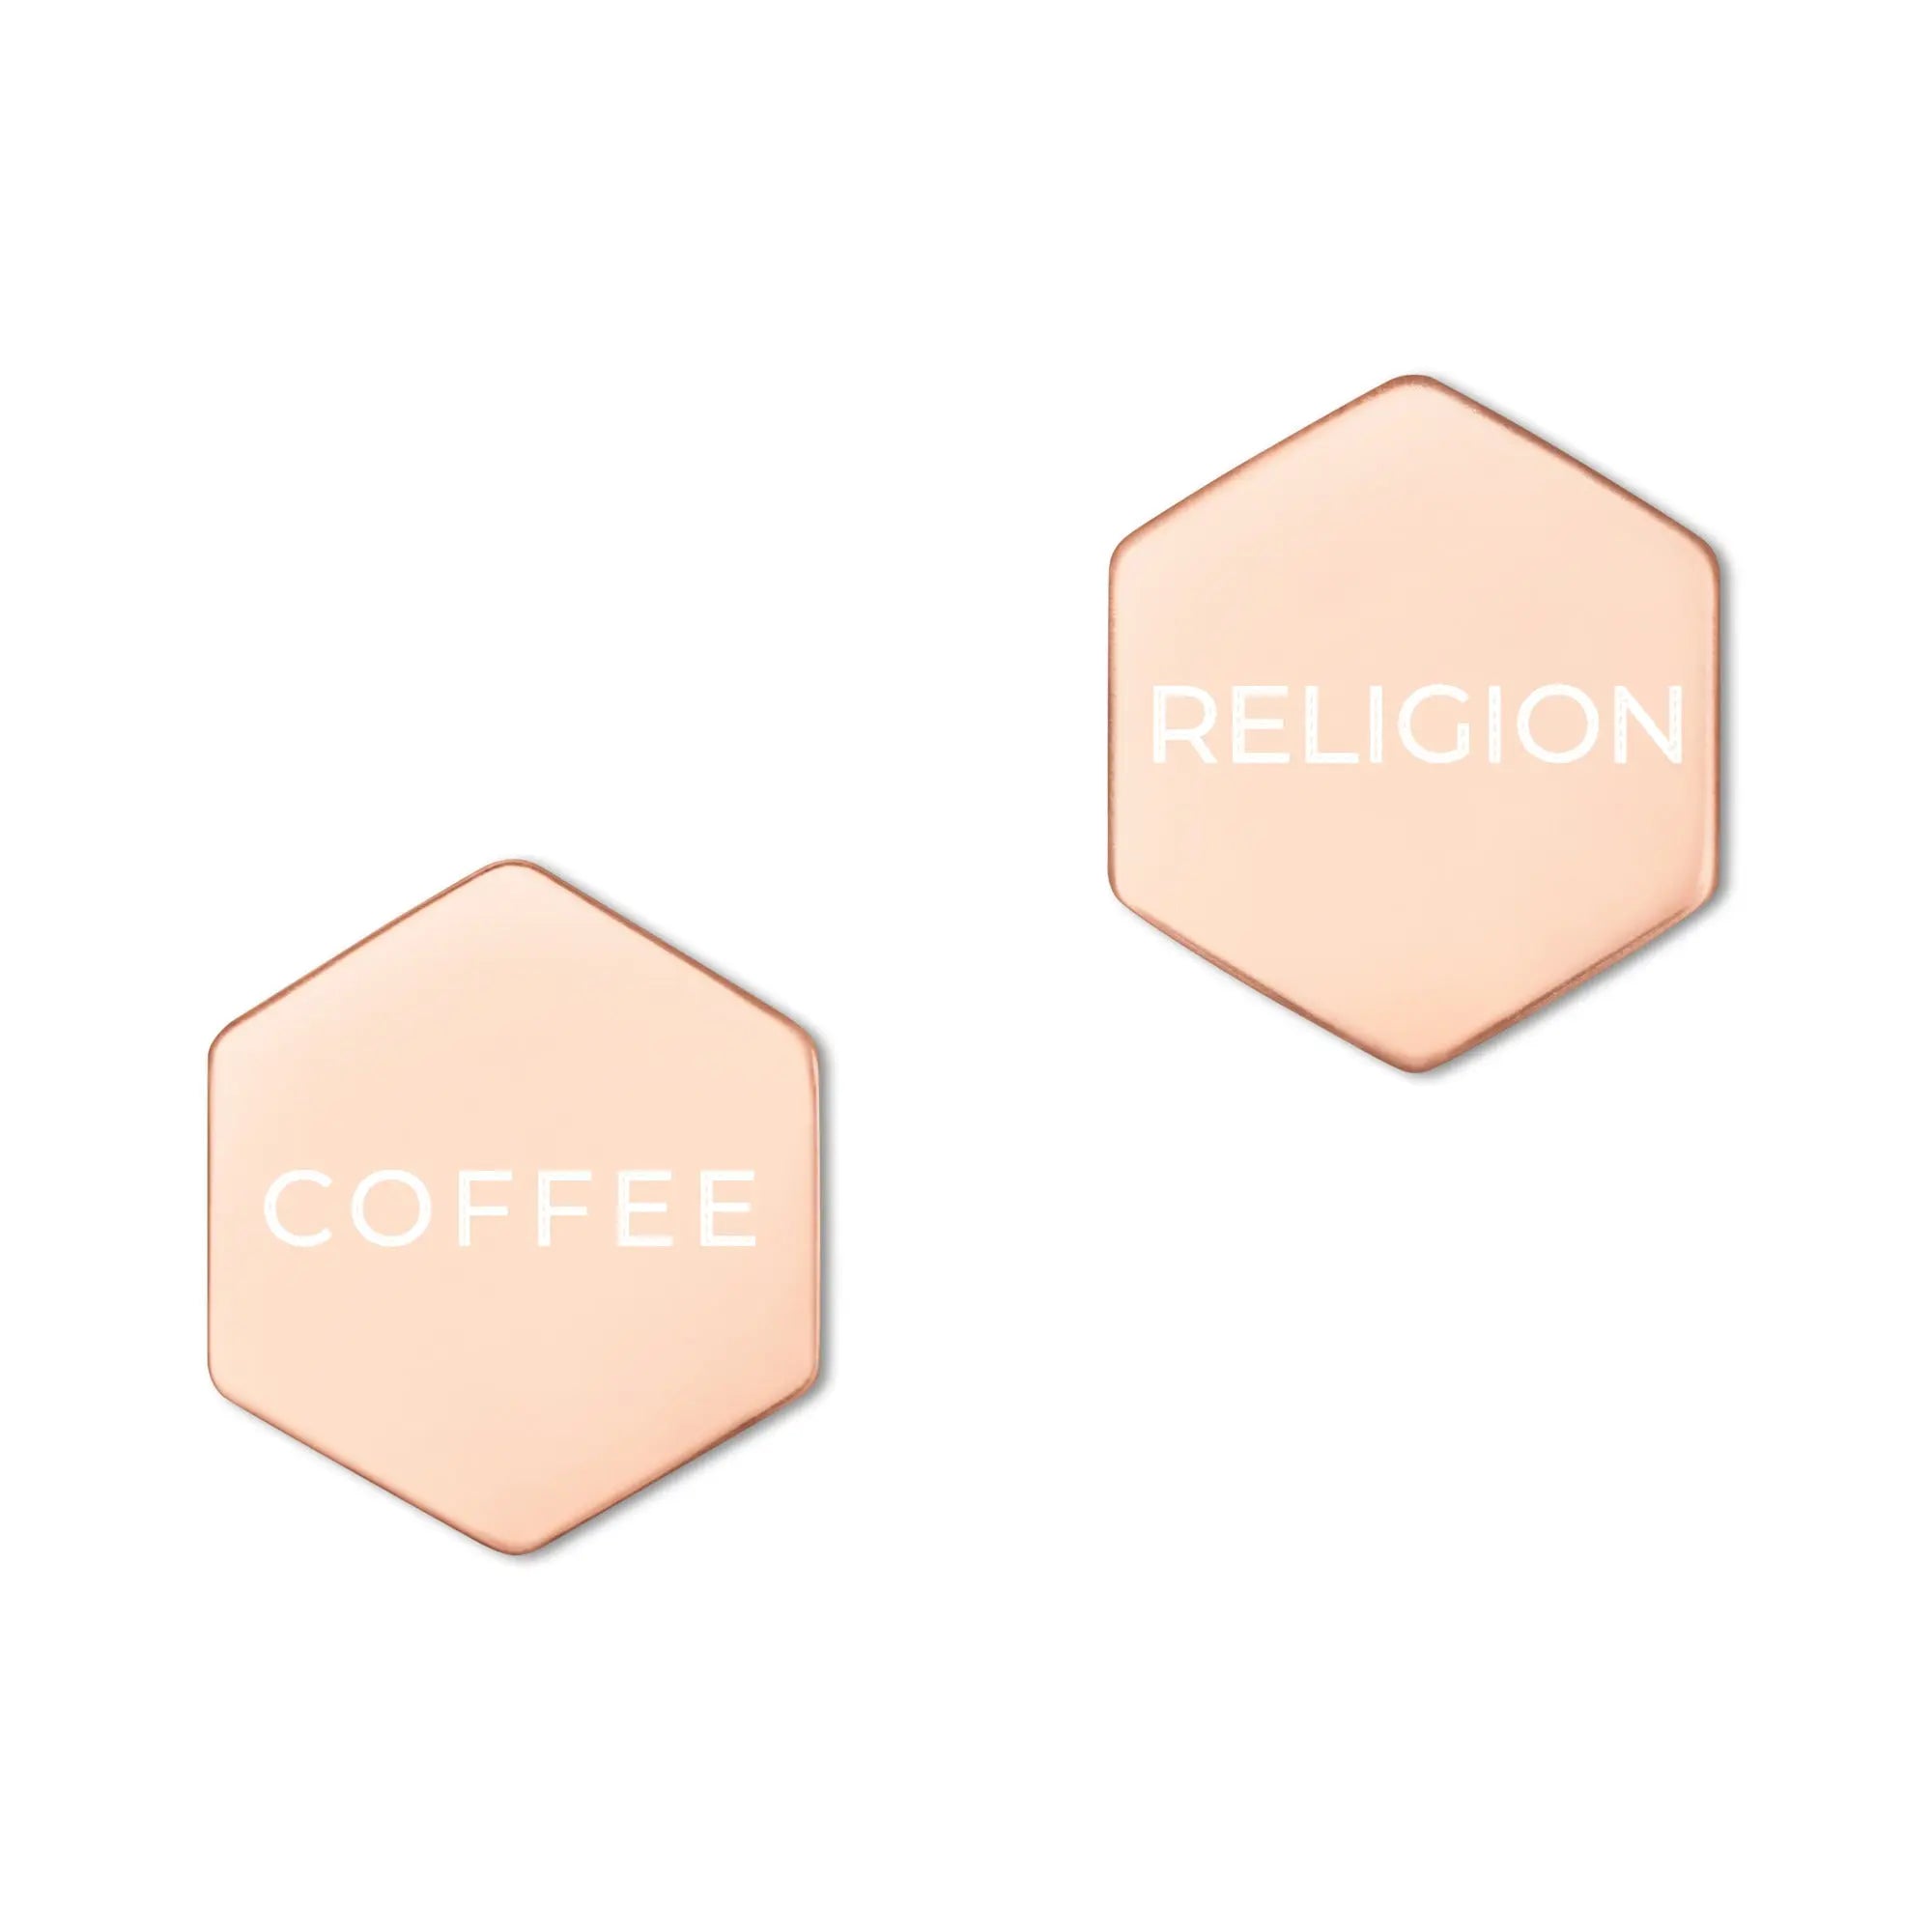 COFFEE RELIGION Earrings COFFEE RELIGION